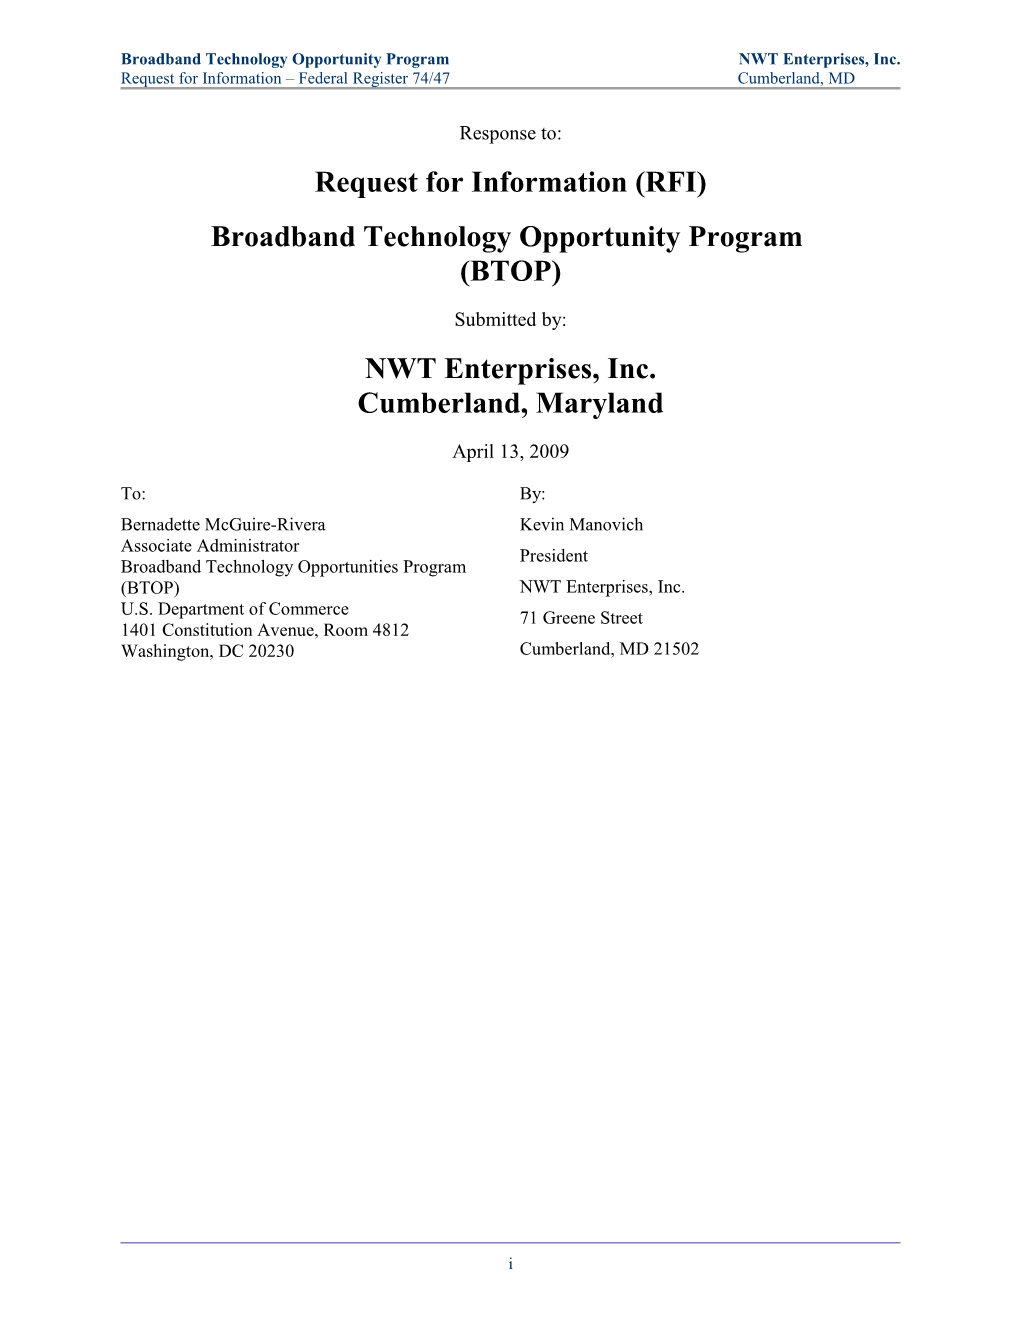 NETCENTS-2 RFI Response (Amendment 002) s1